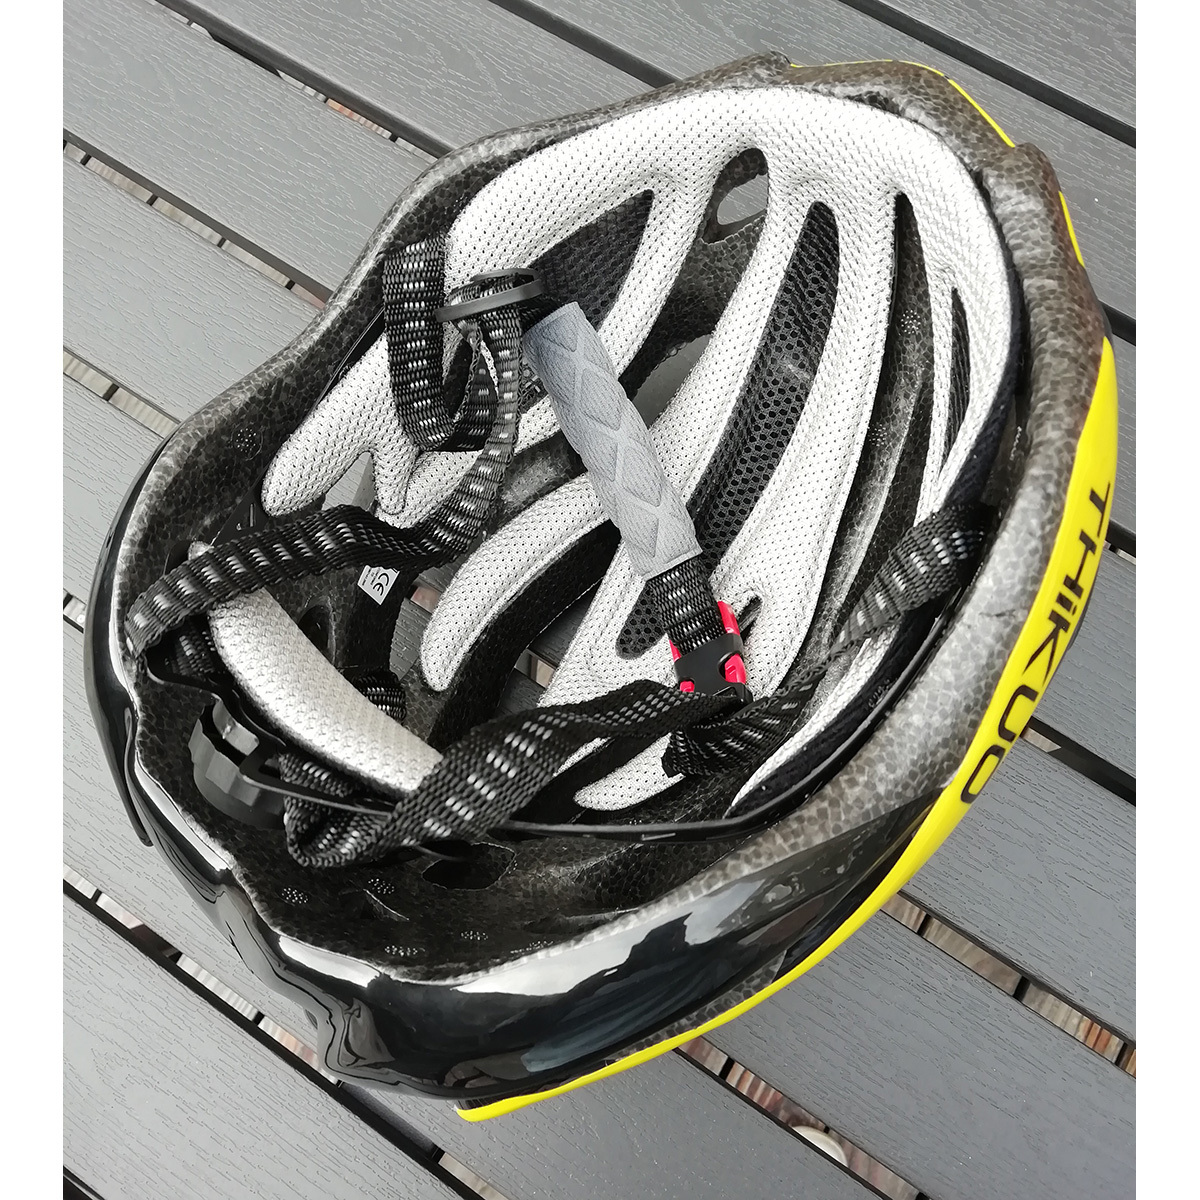 Thikuo road & mountain bike helmet THK-015 One-piece lightweight road & Mountain bicycle helmet 